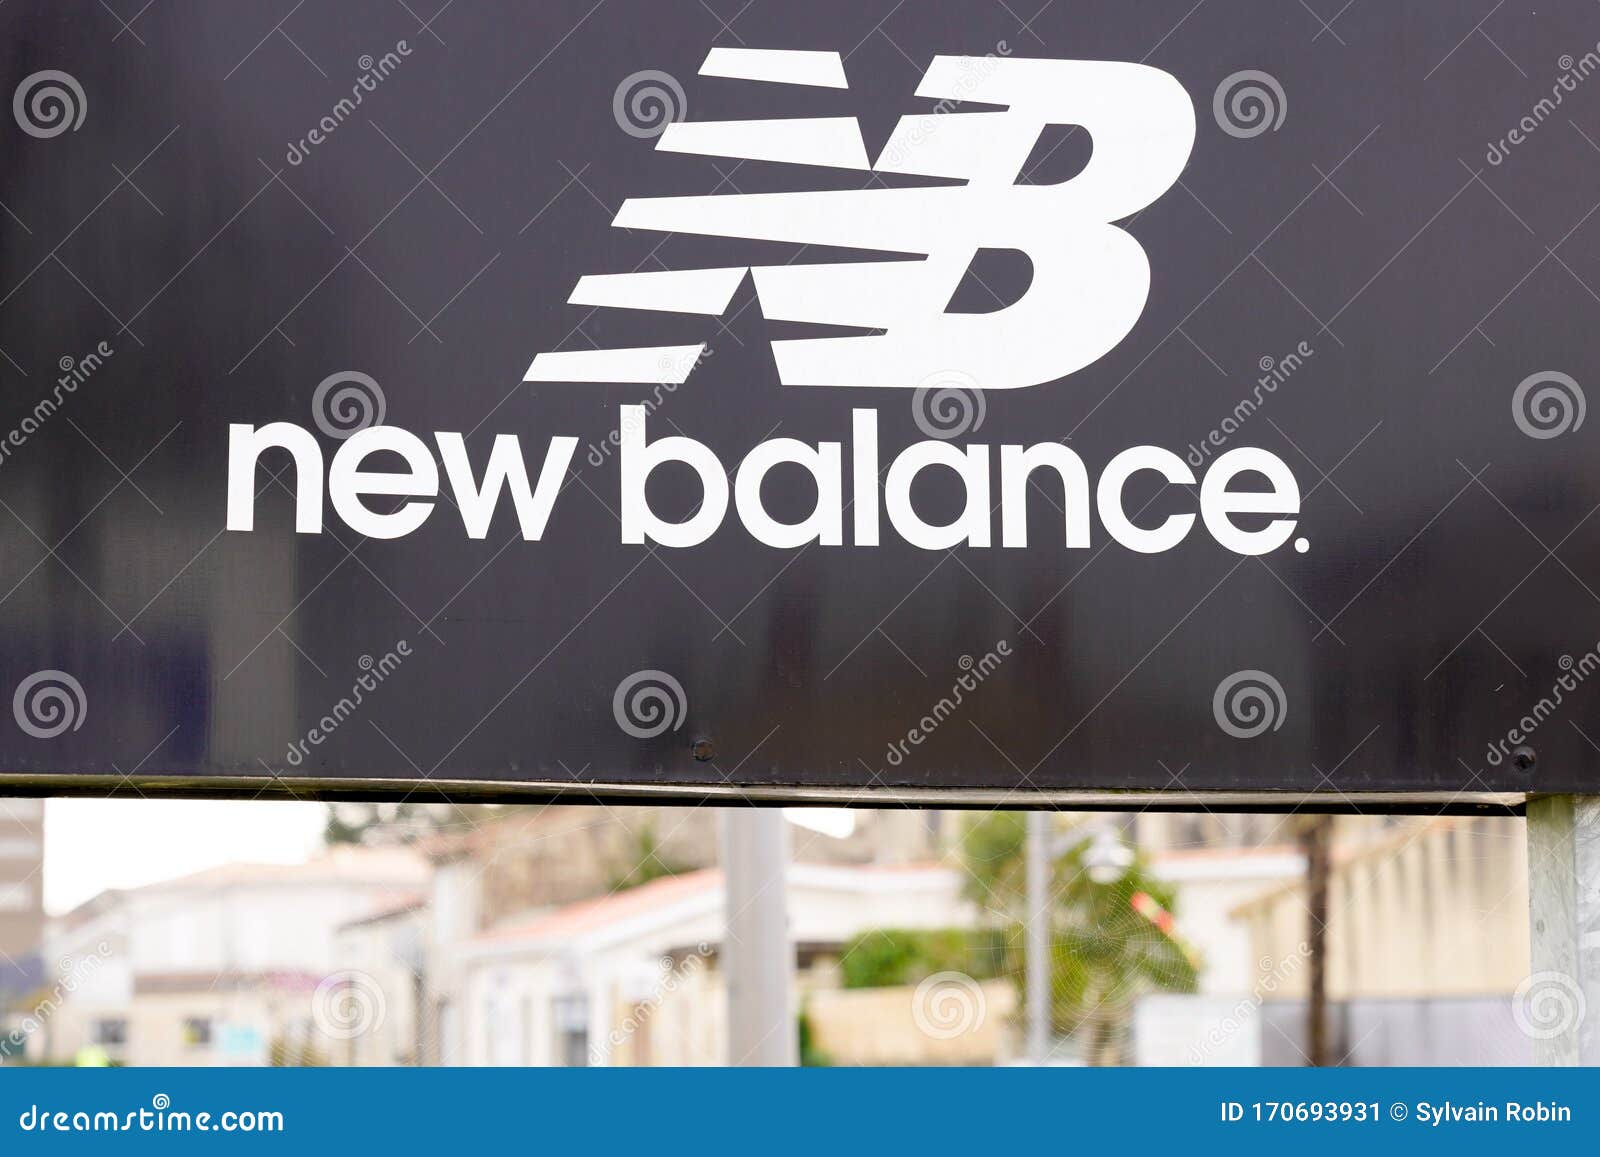 new balance france shop